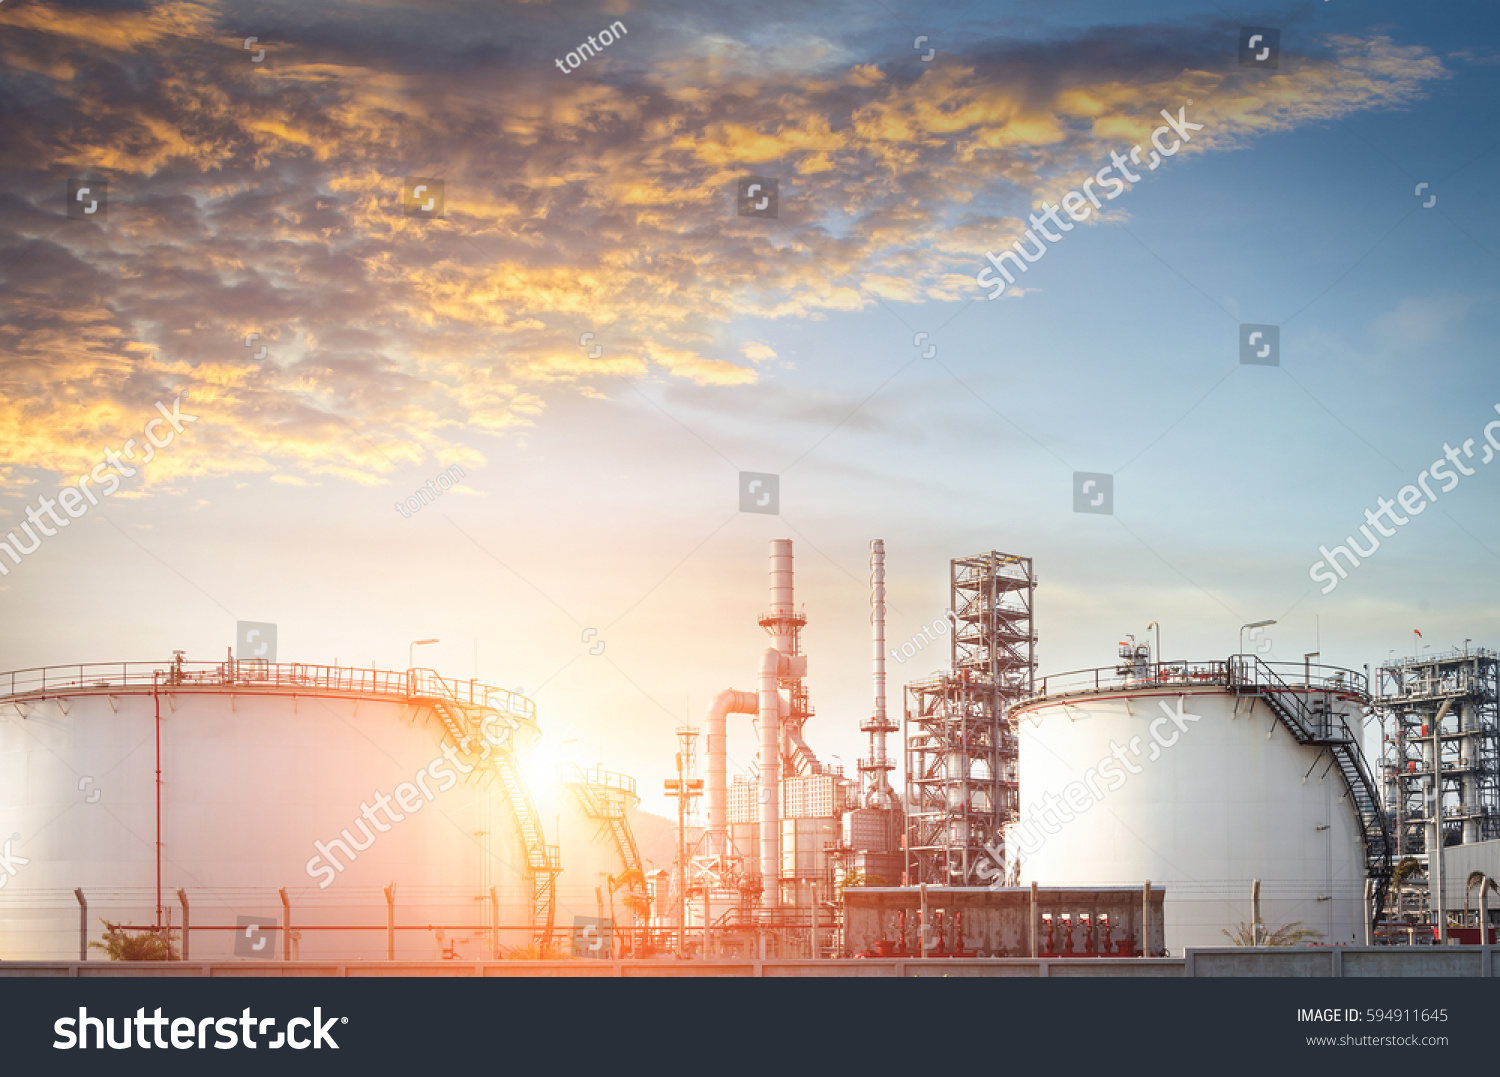 Oil Refinery Oil Industry Stock Photo 594911645 - Shutterstock